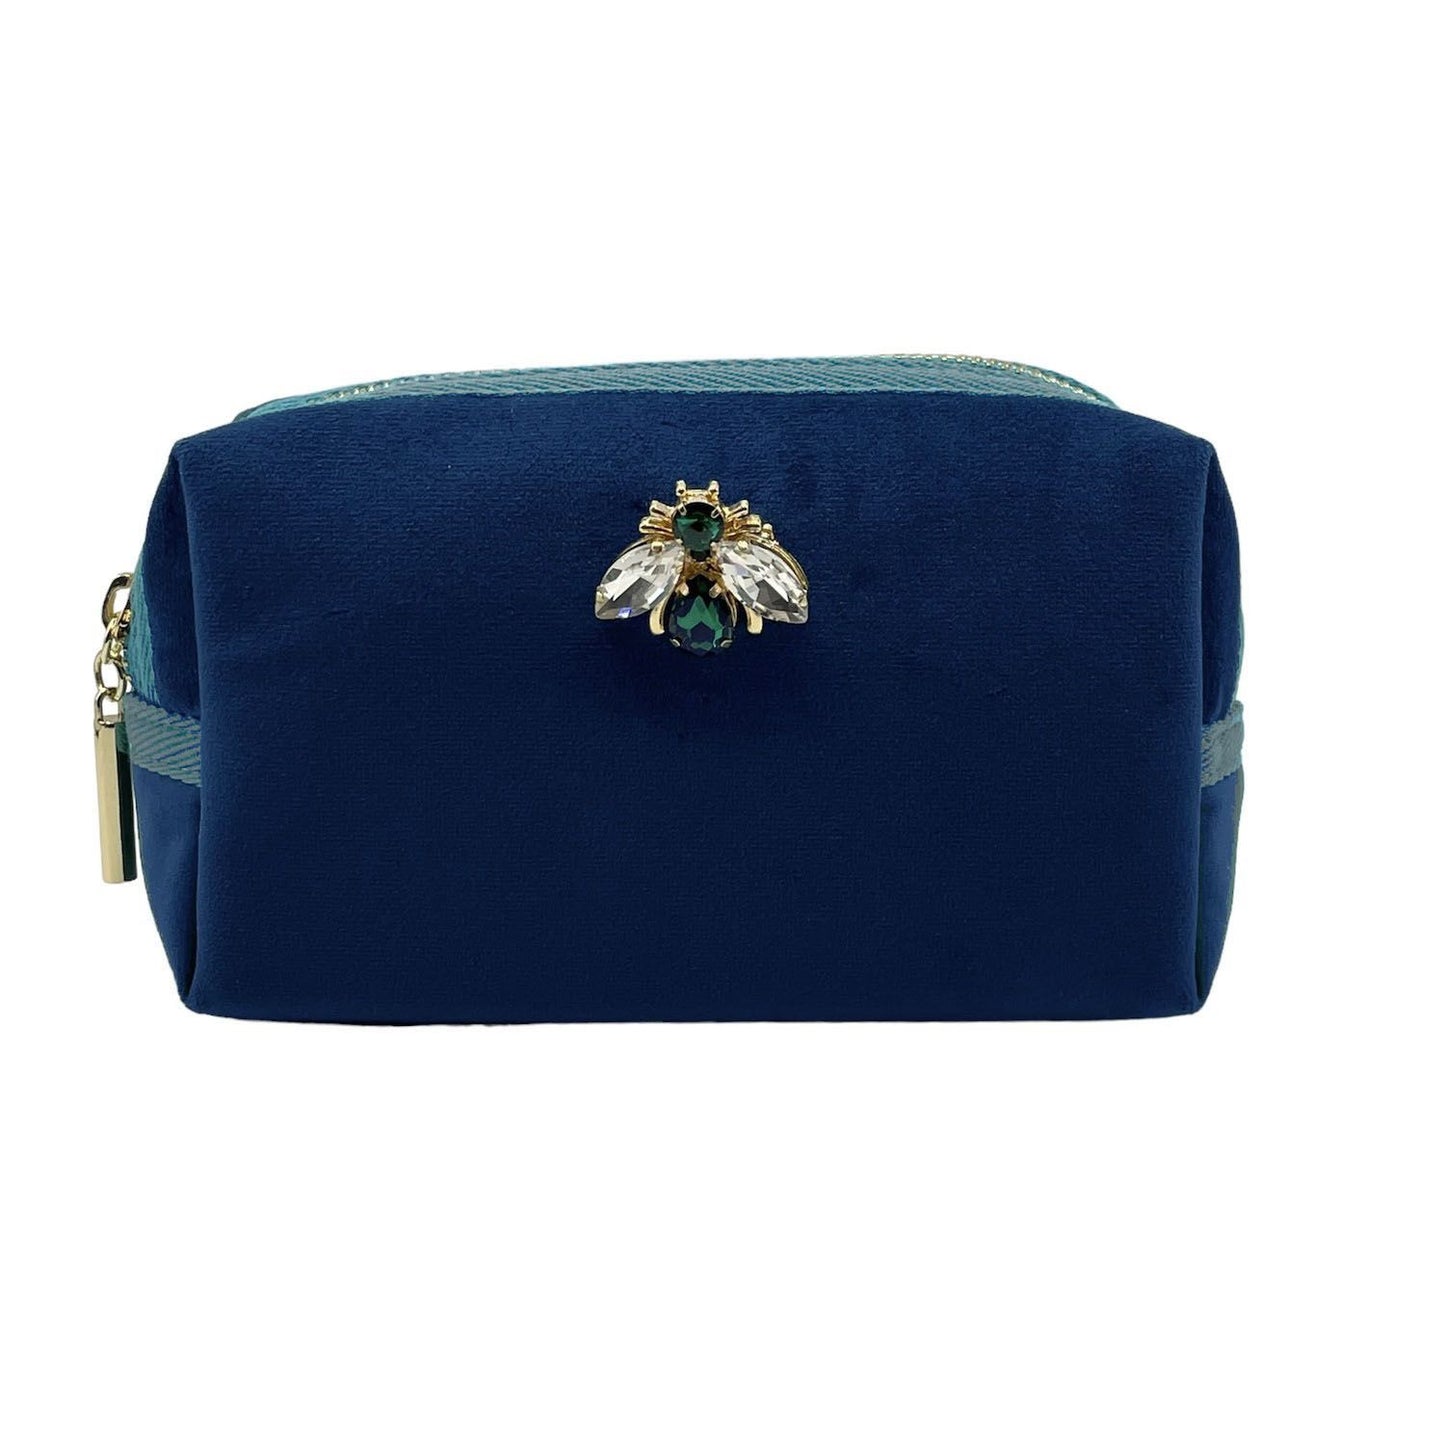 Blue make-up bag & luna bee pin - recycled velvet